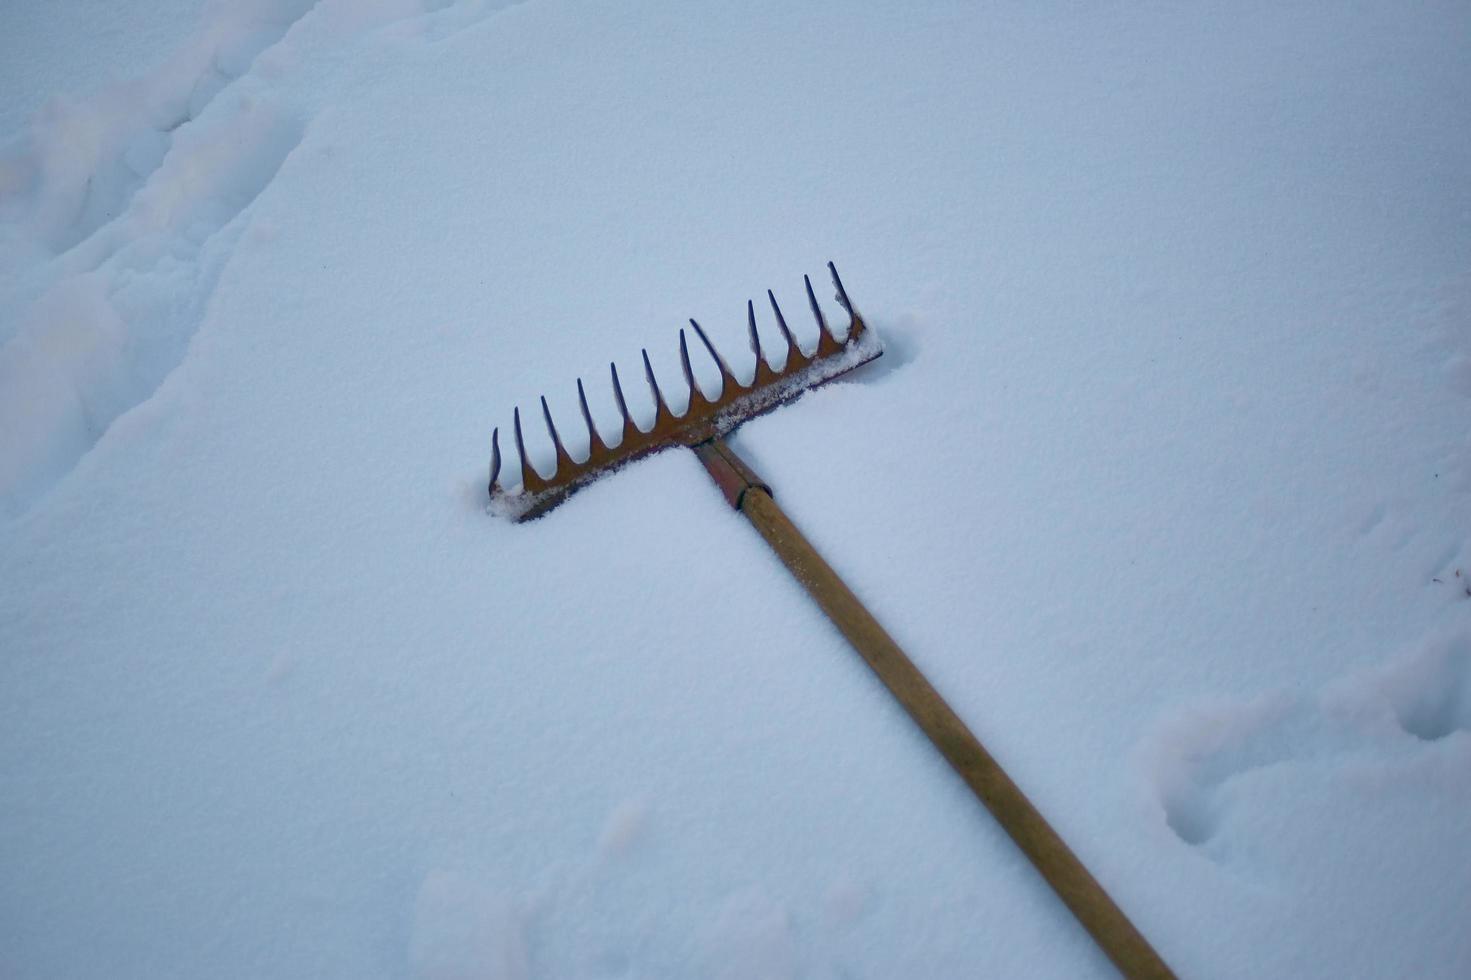 garden rakes in winter, in anticipation of spring work photo